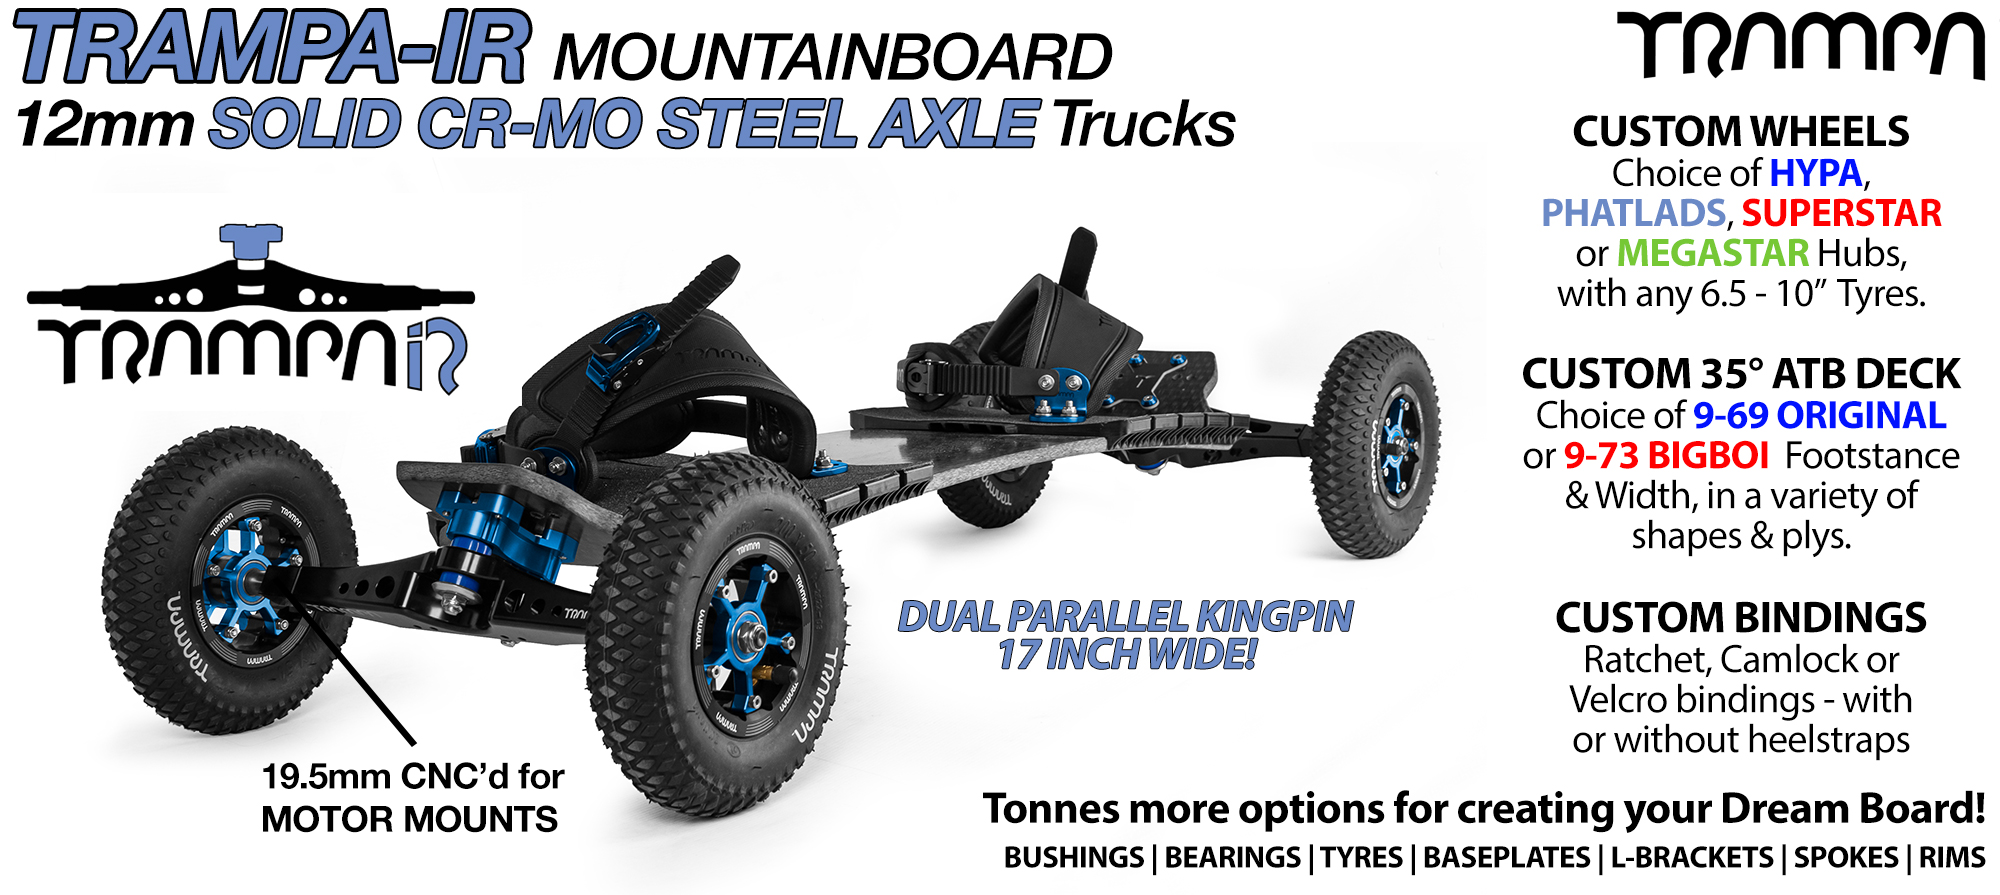 TRAMPA-IR Mountainboard with 12mm SOLID Axle 17 inch wide IR Trucks,RATCHET Bindings & Custom Wheels